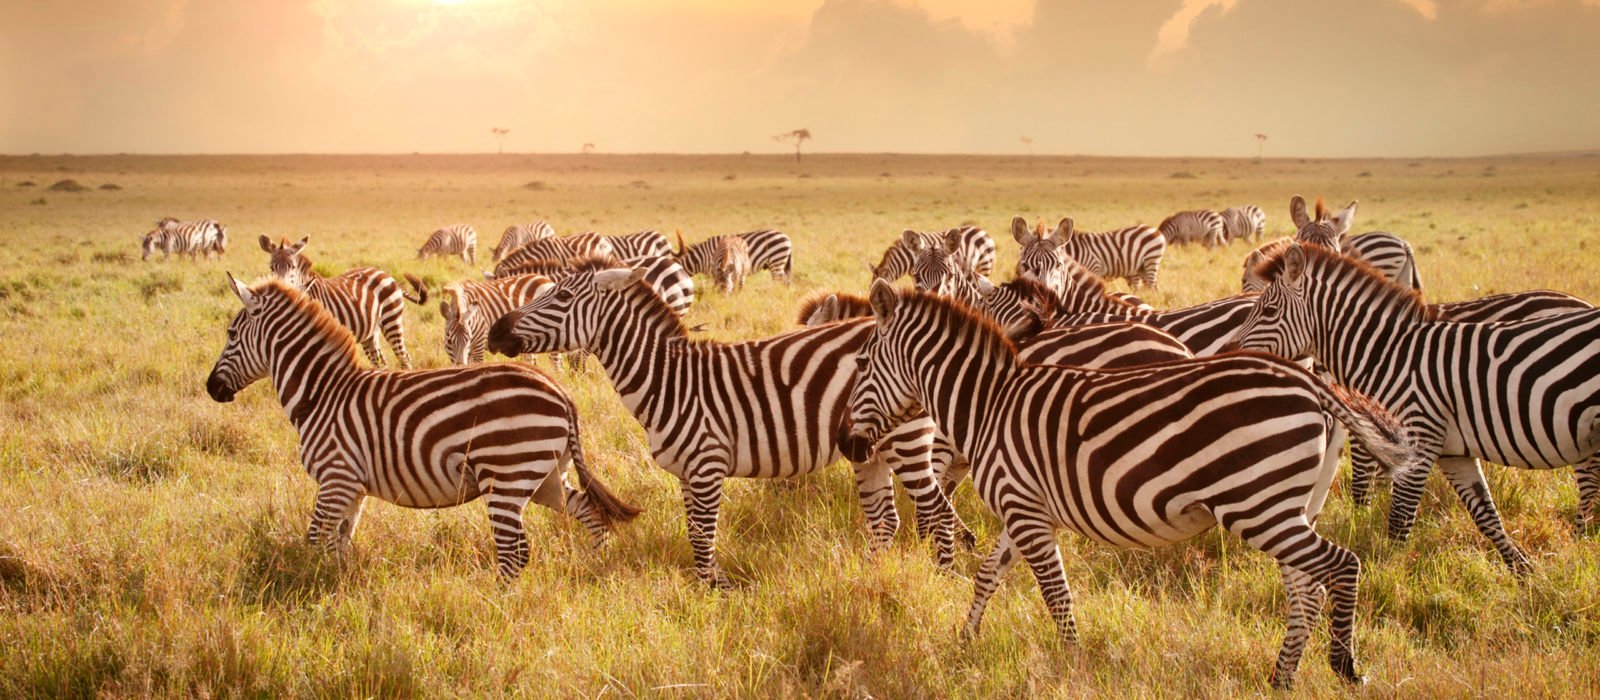 Zebras in the Maasai Mara, Kenya